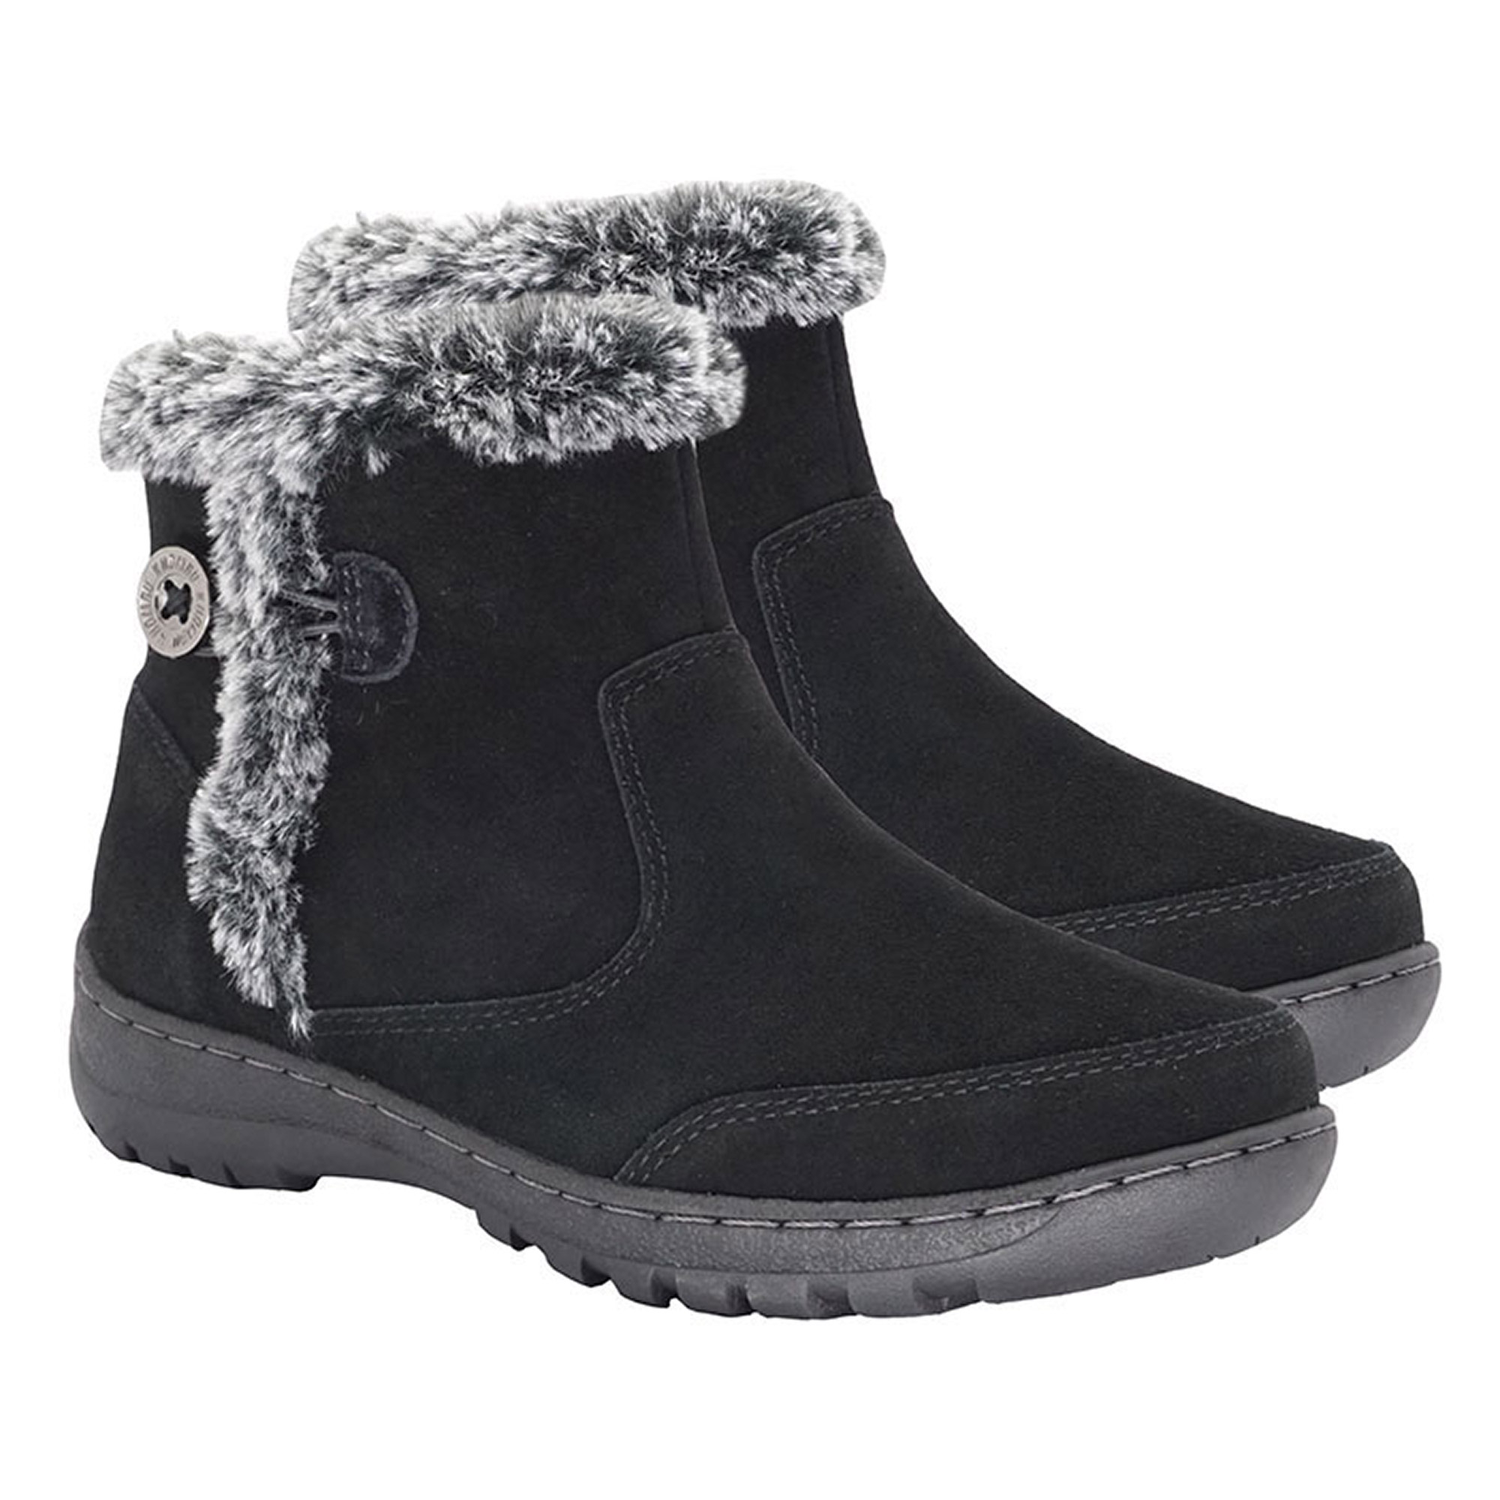 Khombu Women's Iris Black Suede Leather Winter Snow Ankle Boot Bootie ...